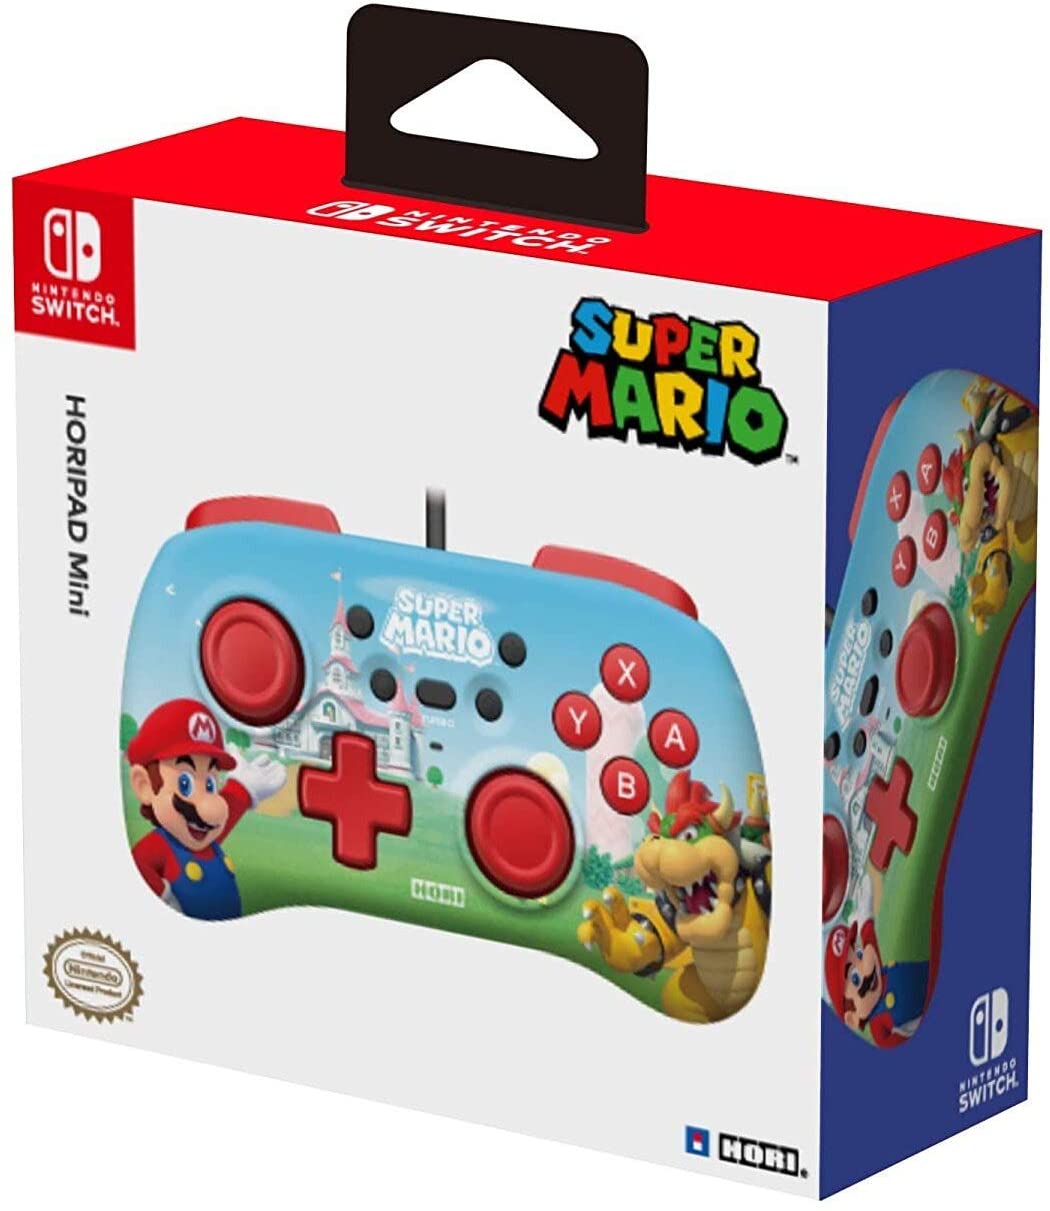 Hori pad Mini (Mario) for Nintendo Switch